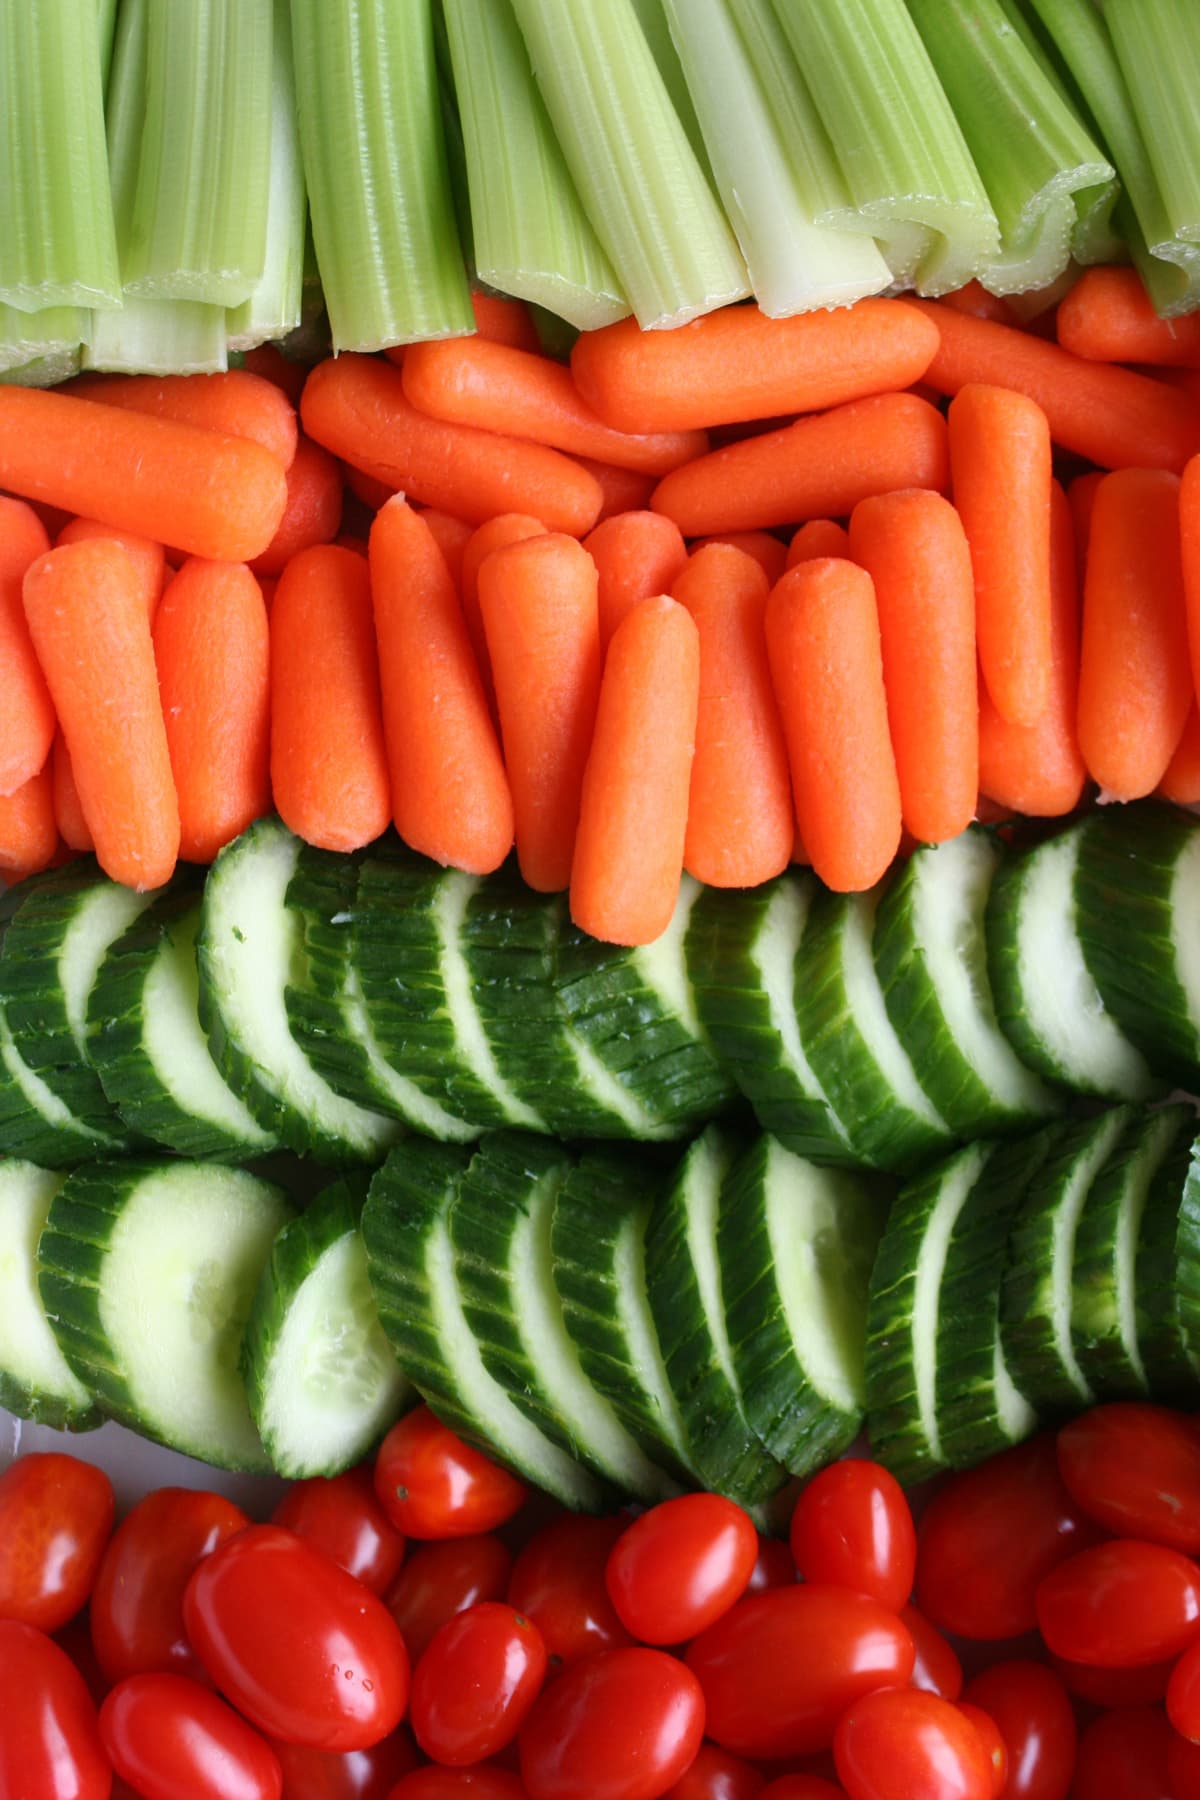 A vegetable arrangement.